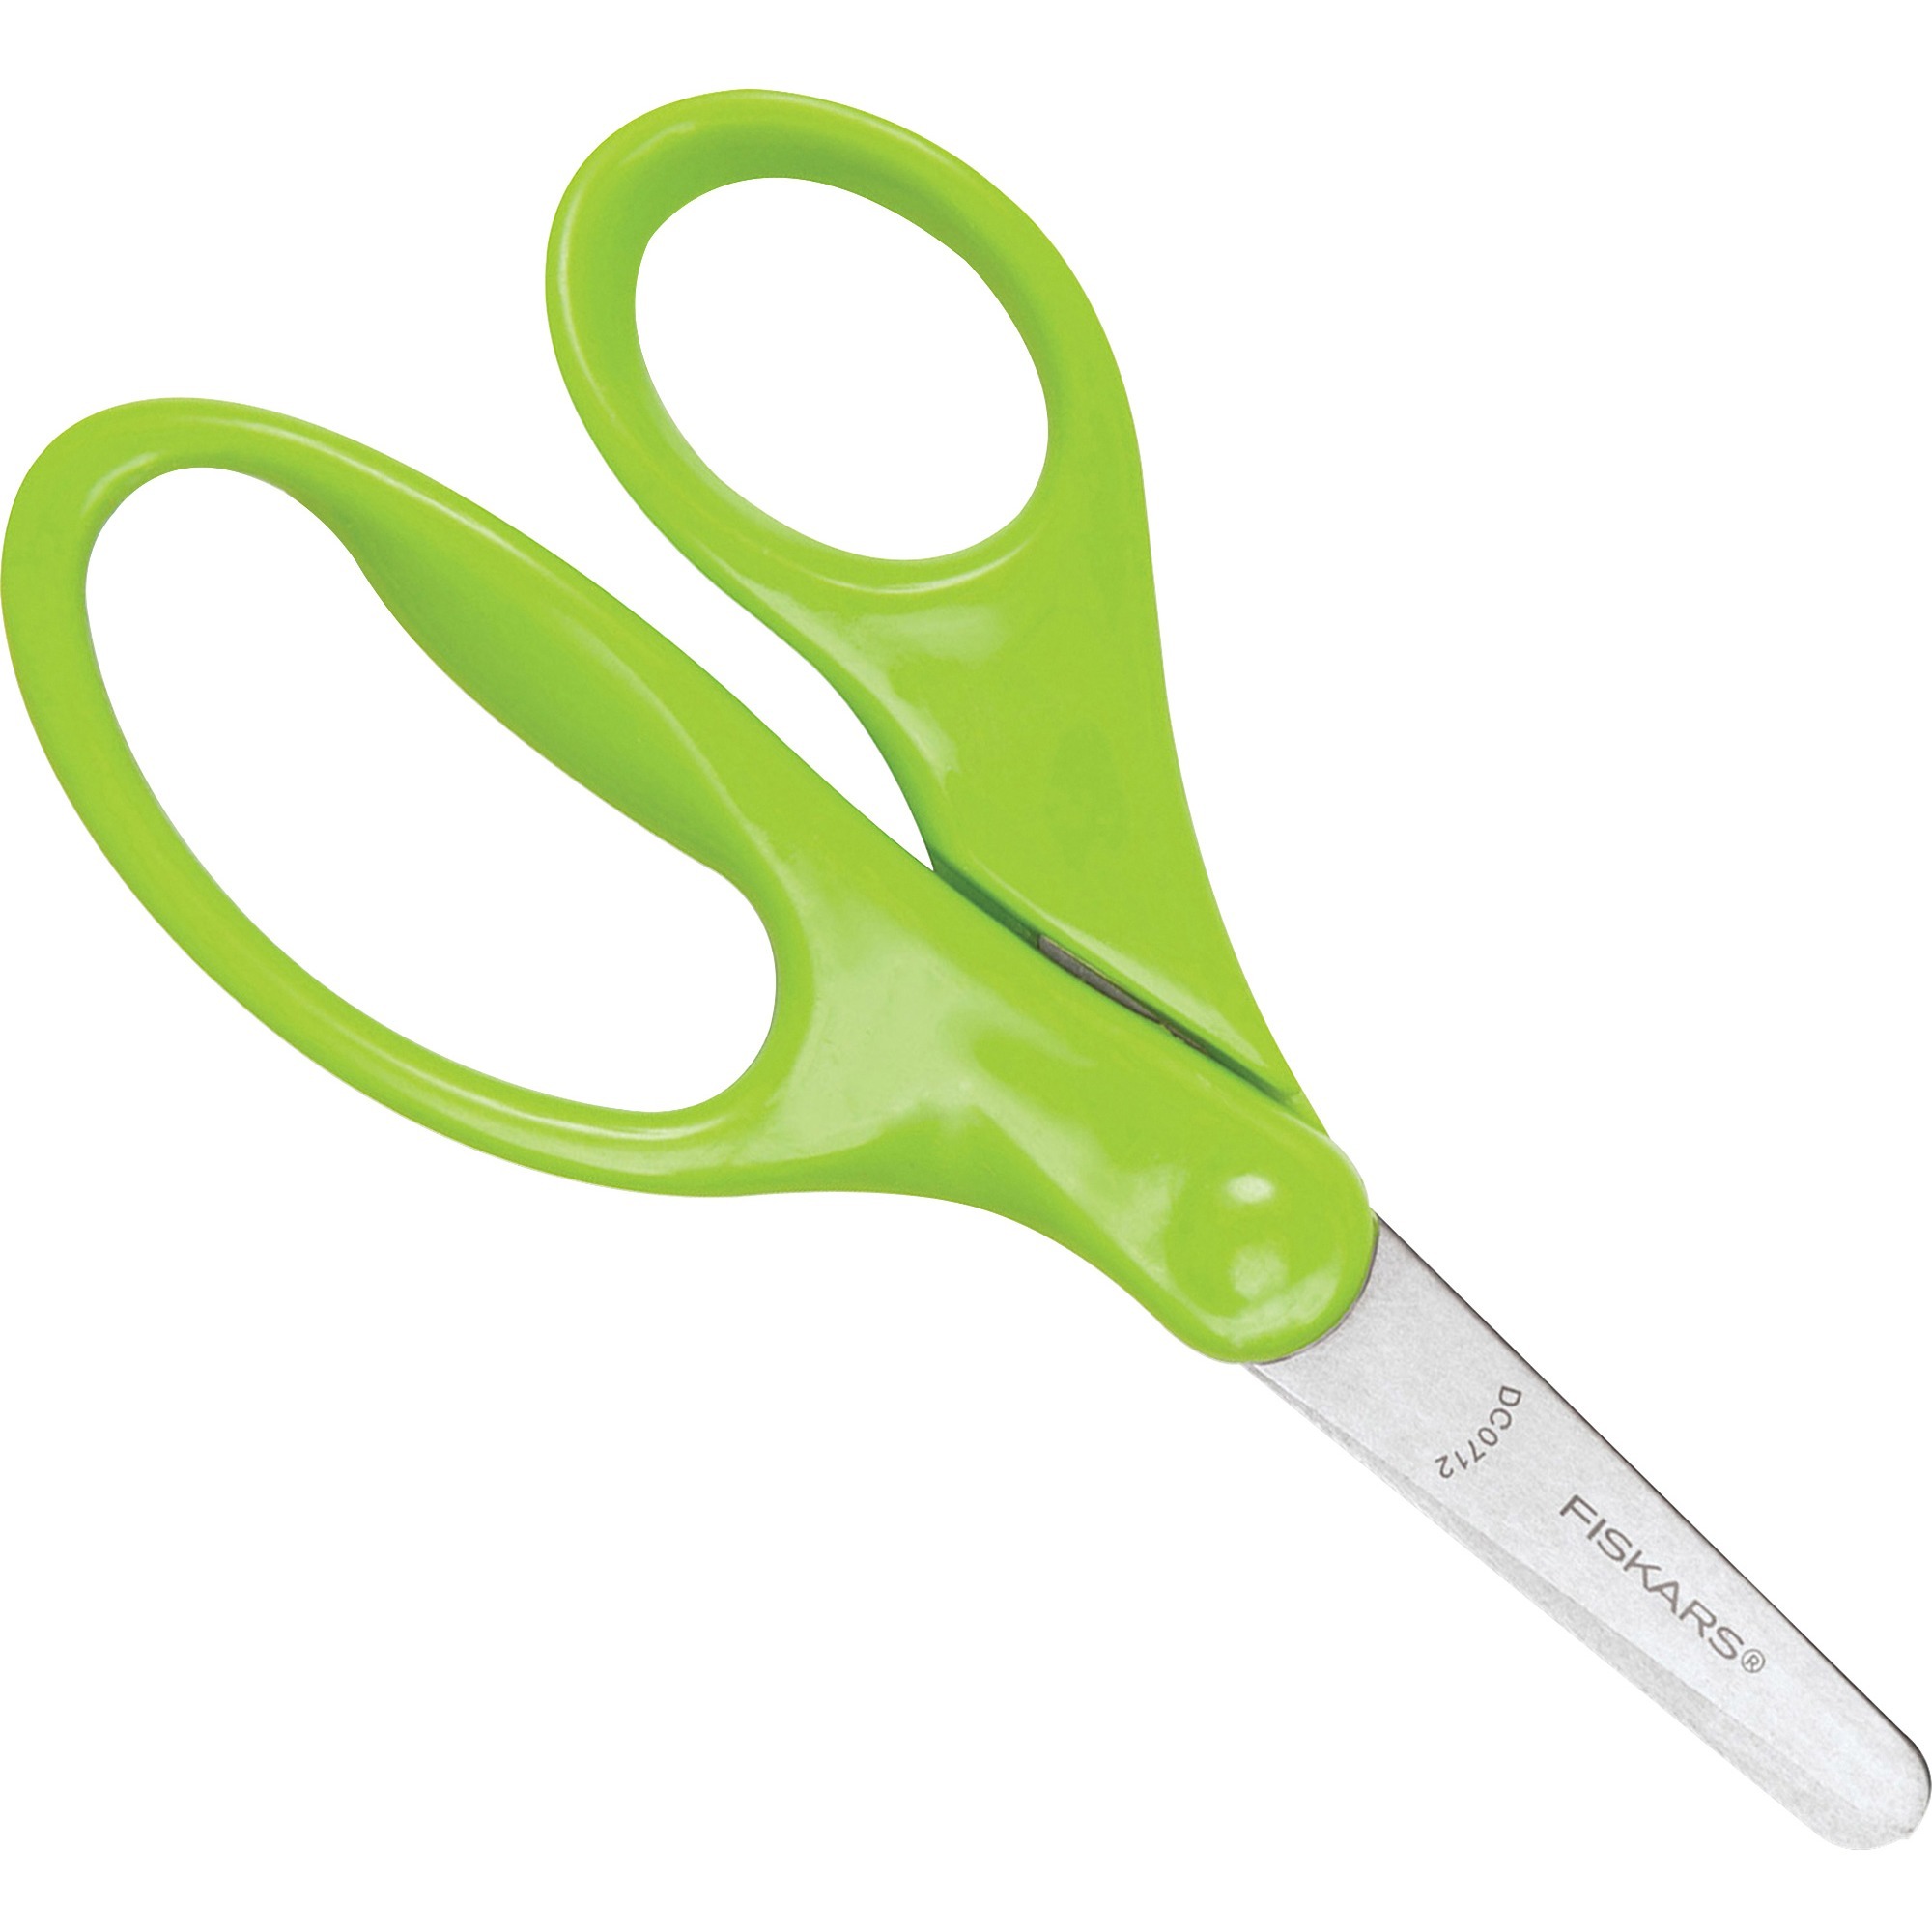 Koopy 5 Spring-Assisted Educational Scissors, Blunt Tip